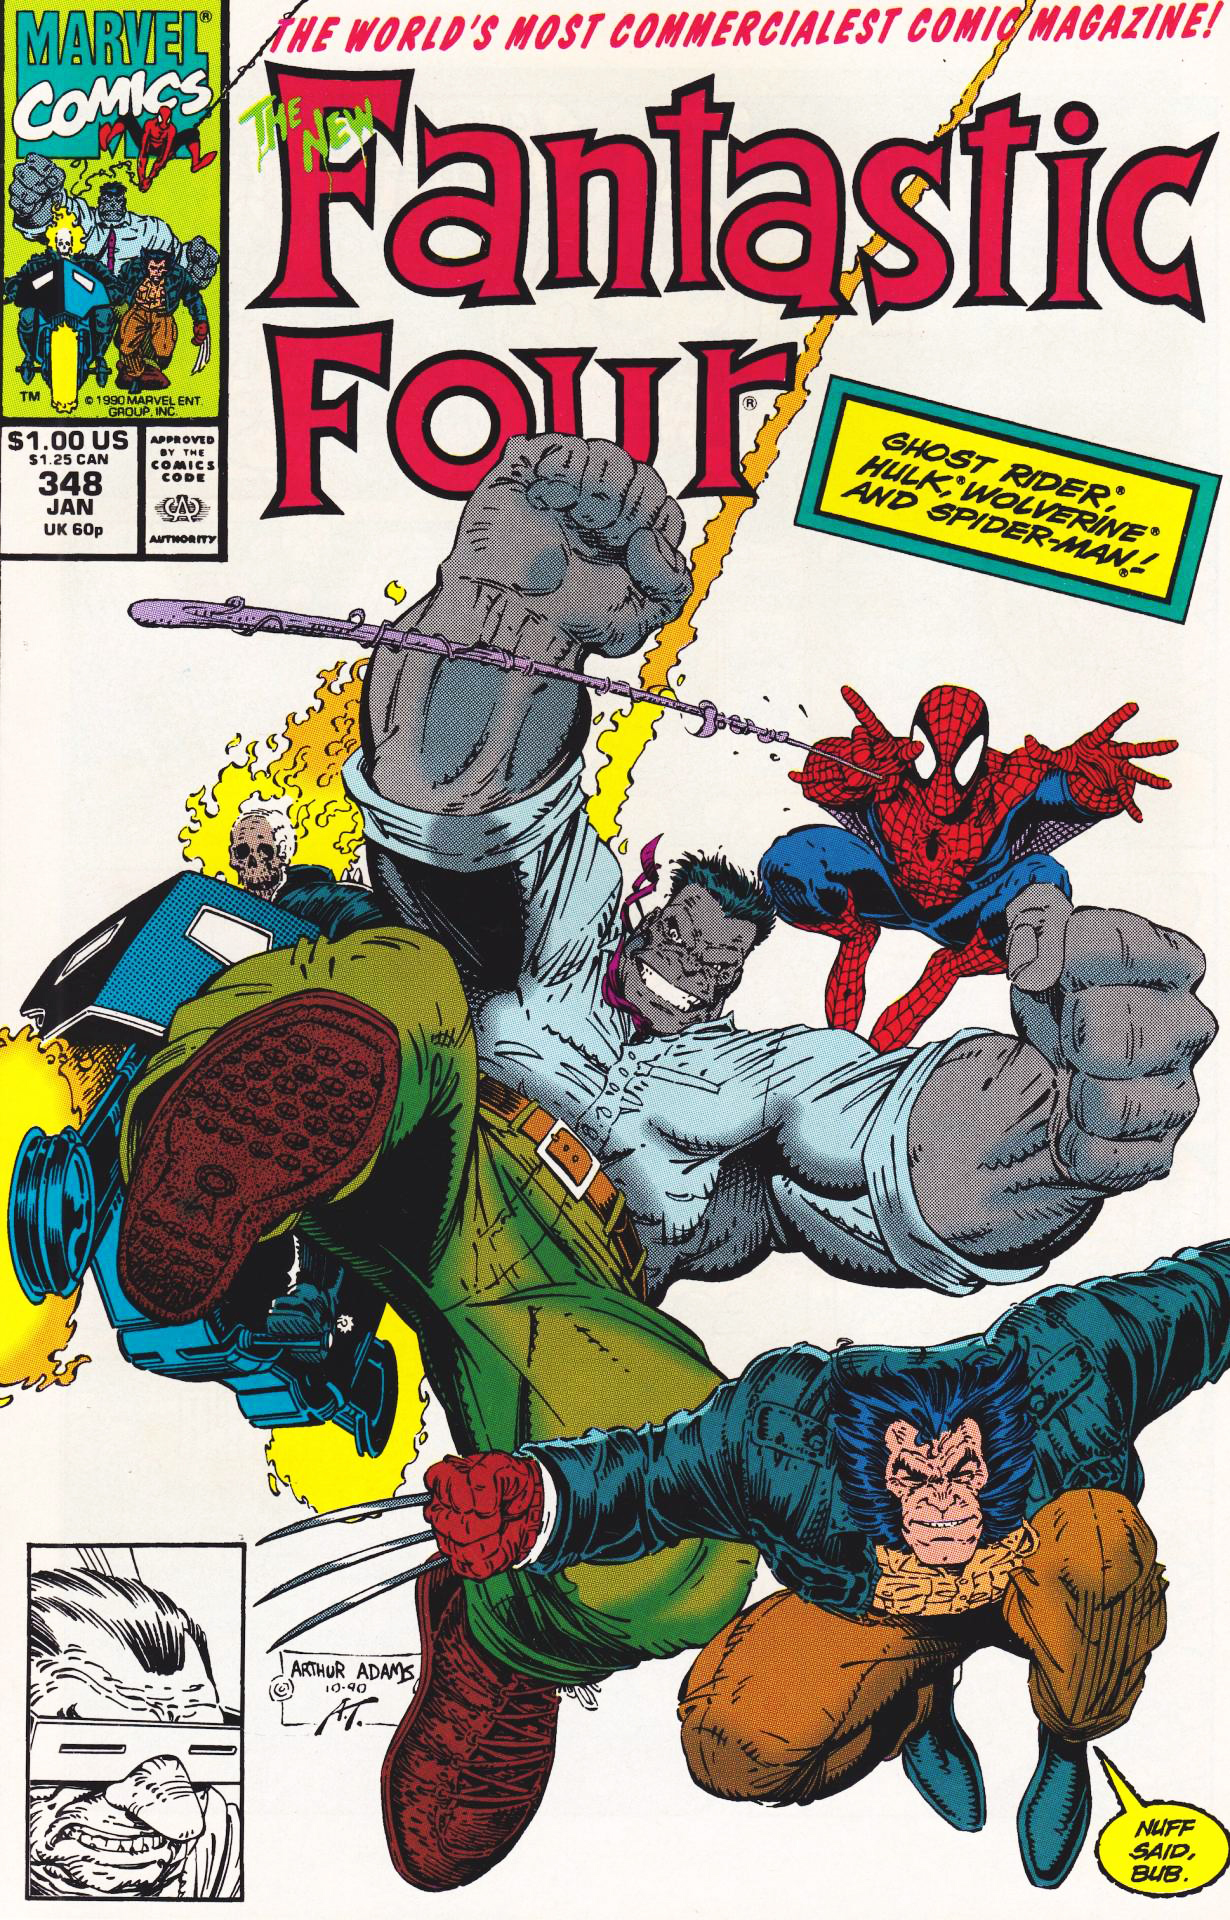 Fantastic Four #348 | Arthur Adams